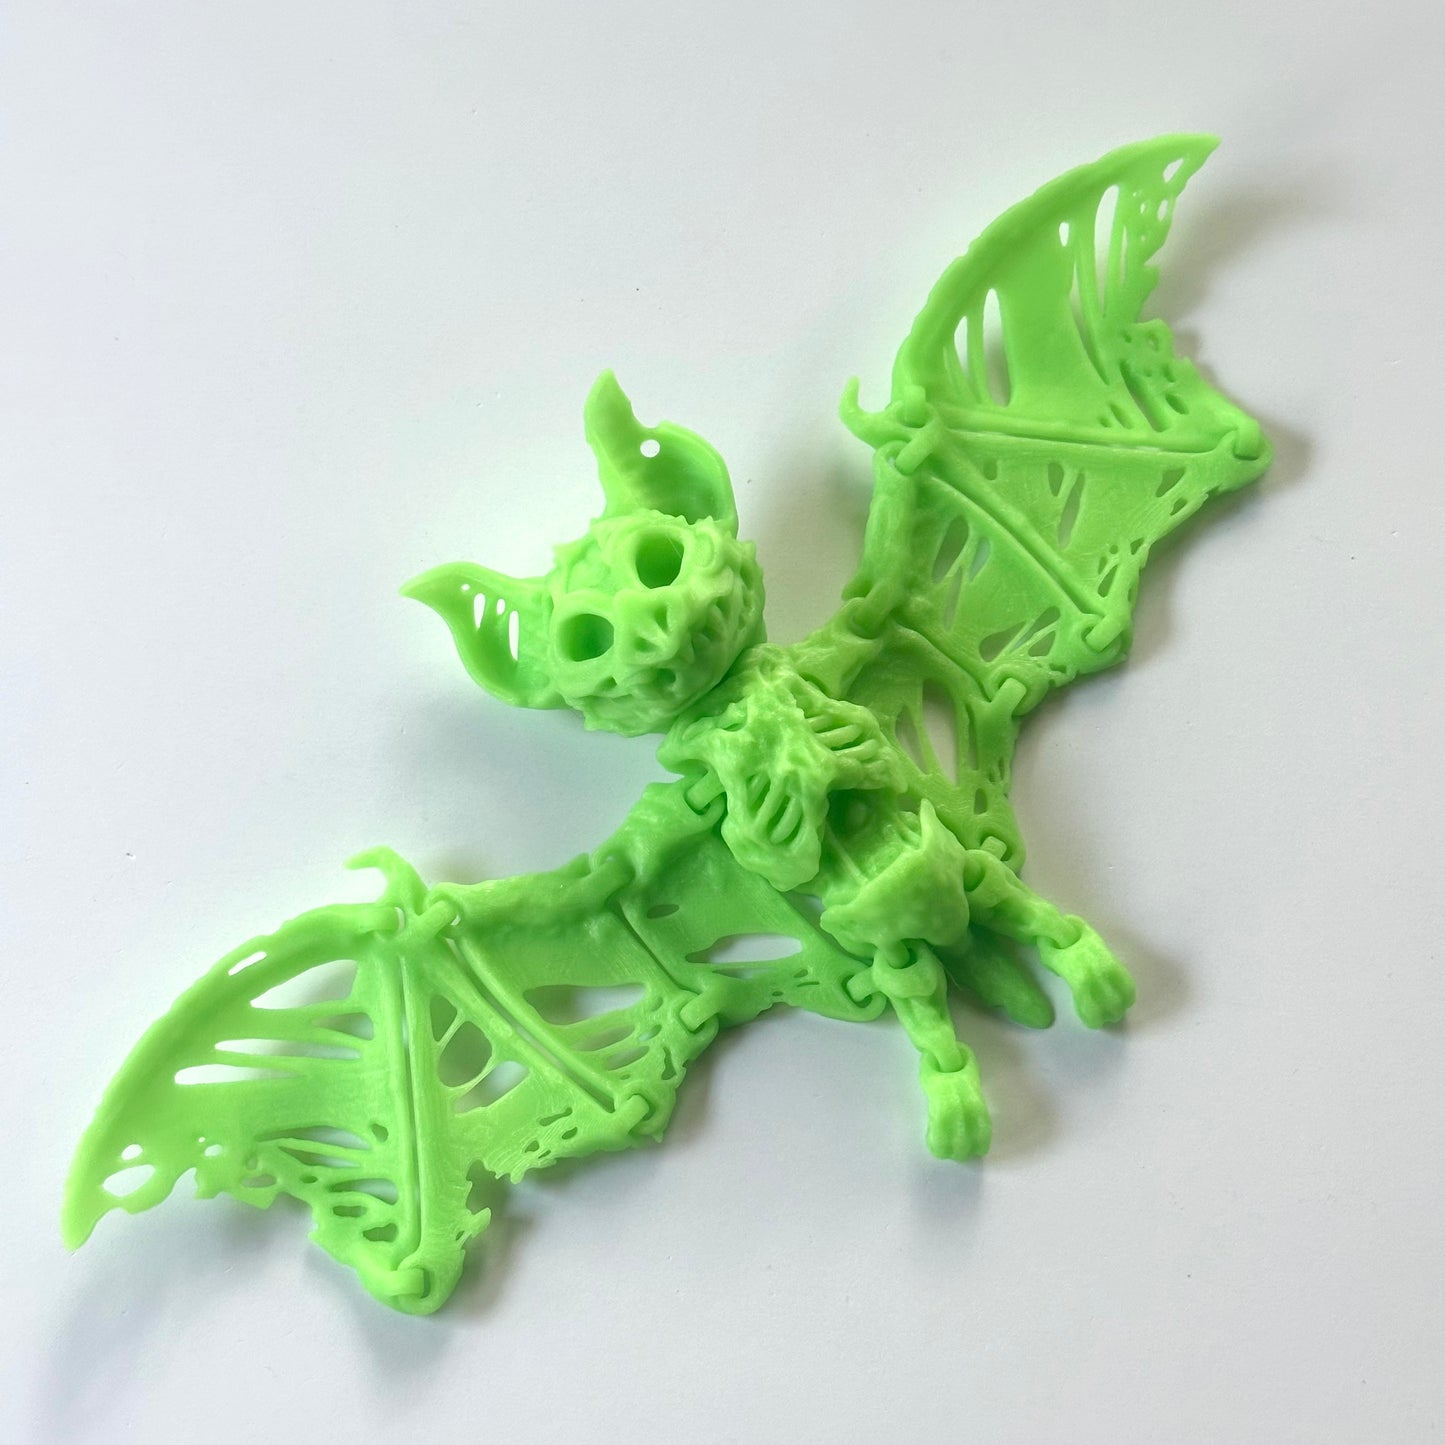 ZomBat - 3D Printed Articulating Figurine